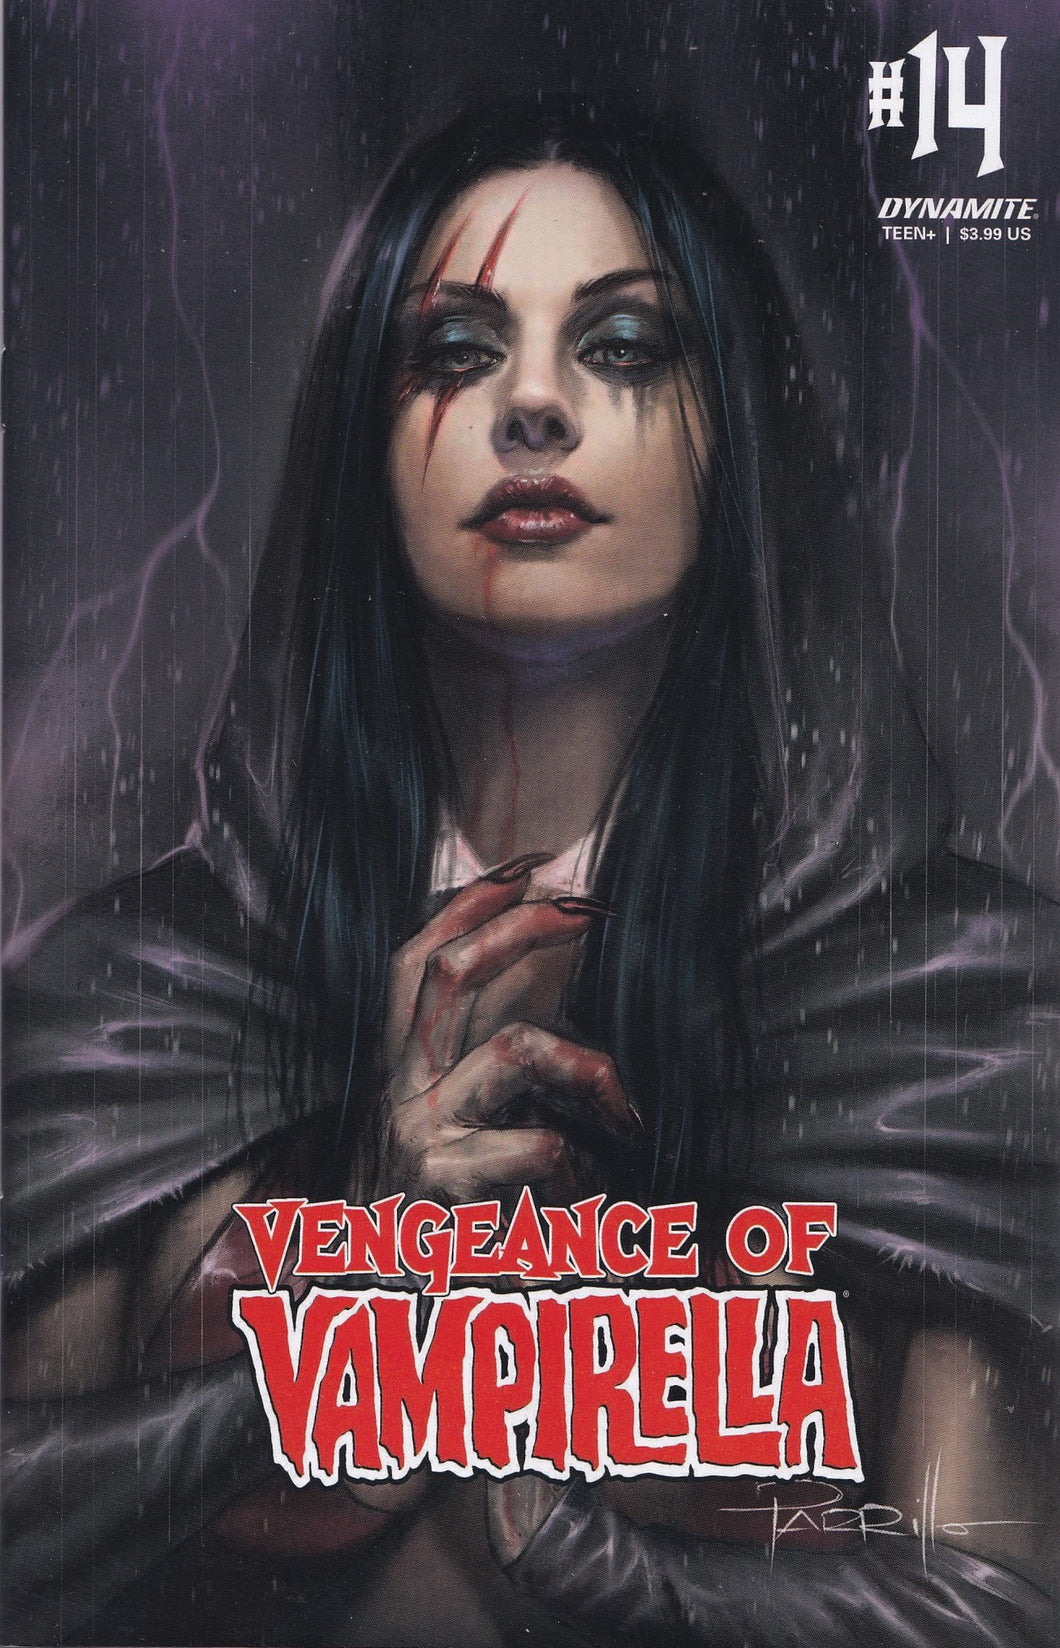 VENGEANCE OF VAMPIRELLA #14 (LUCIO PARRILLO VARIANT) COMIC BOOK ~ Dynamite